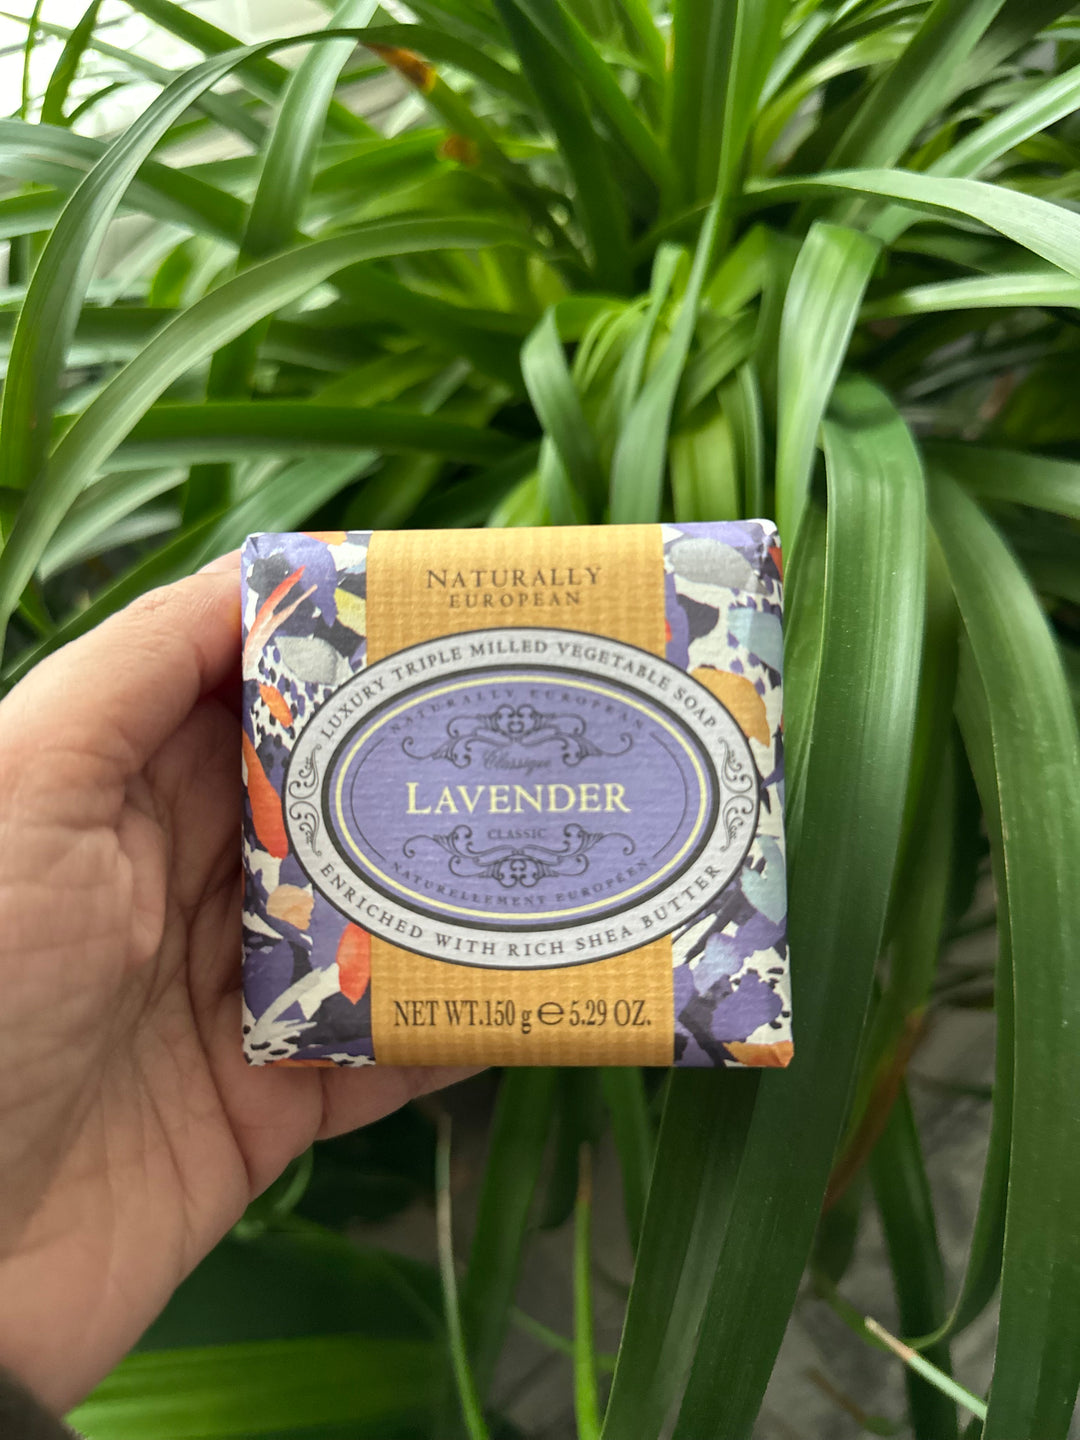 Naturally European Lavender Soap